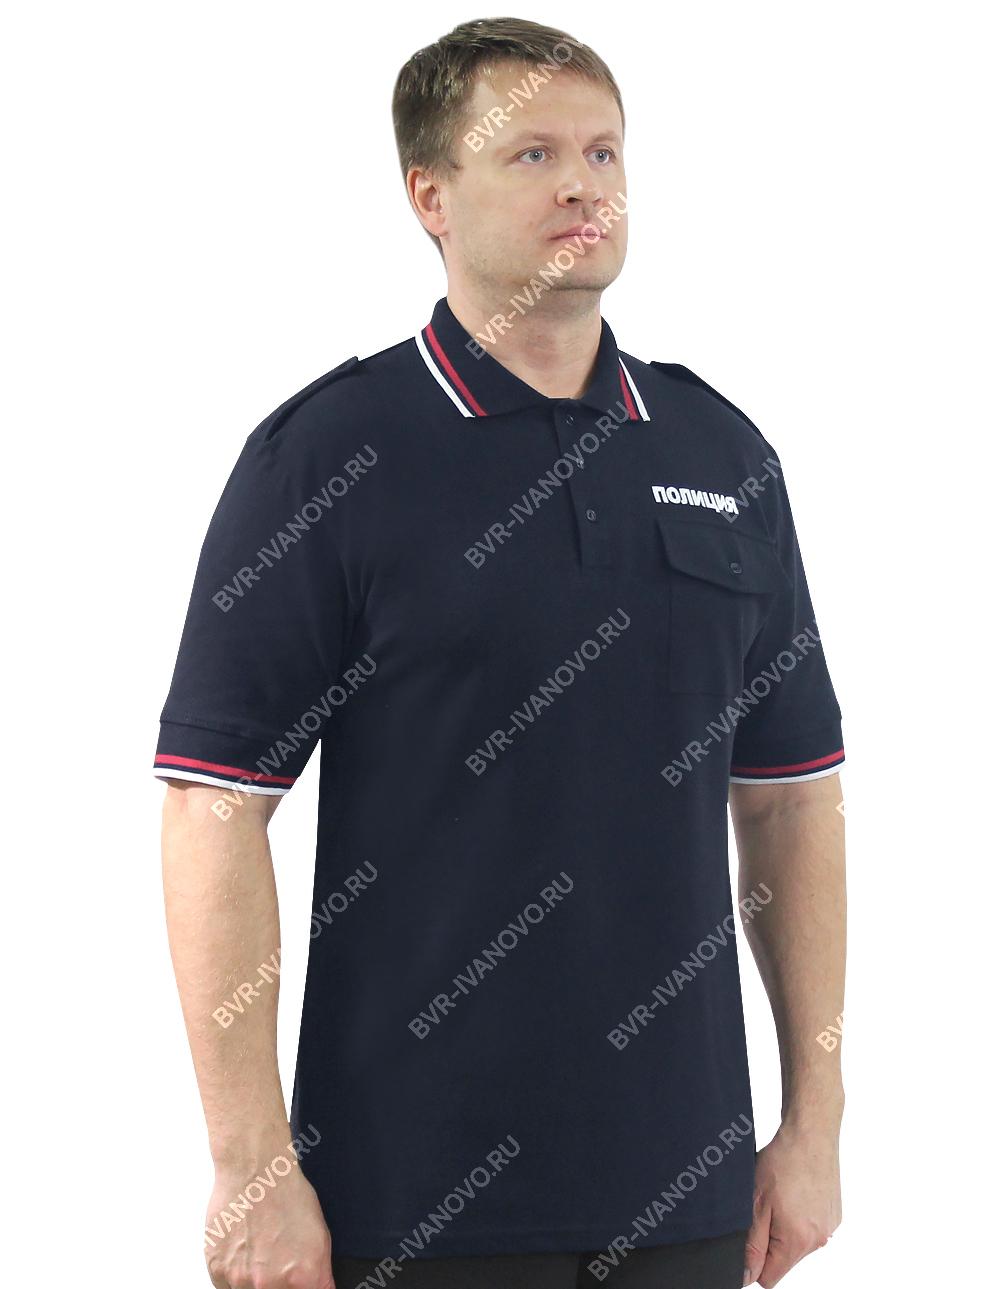 Рубашка Поло Полиция цв.Тёмно-синий с карманом